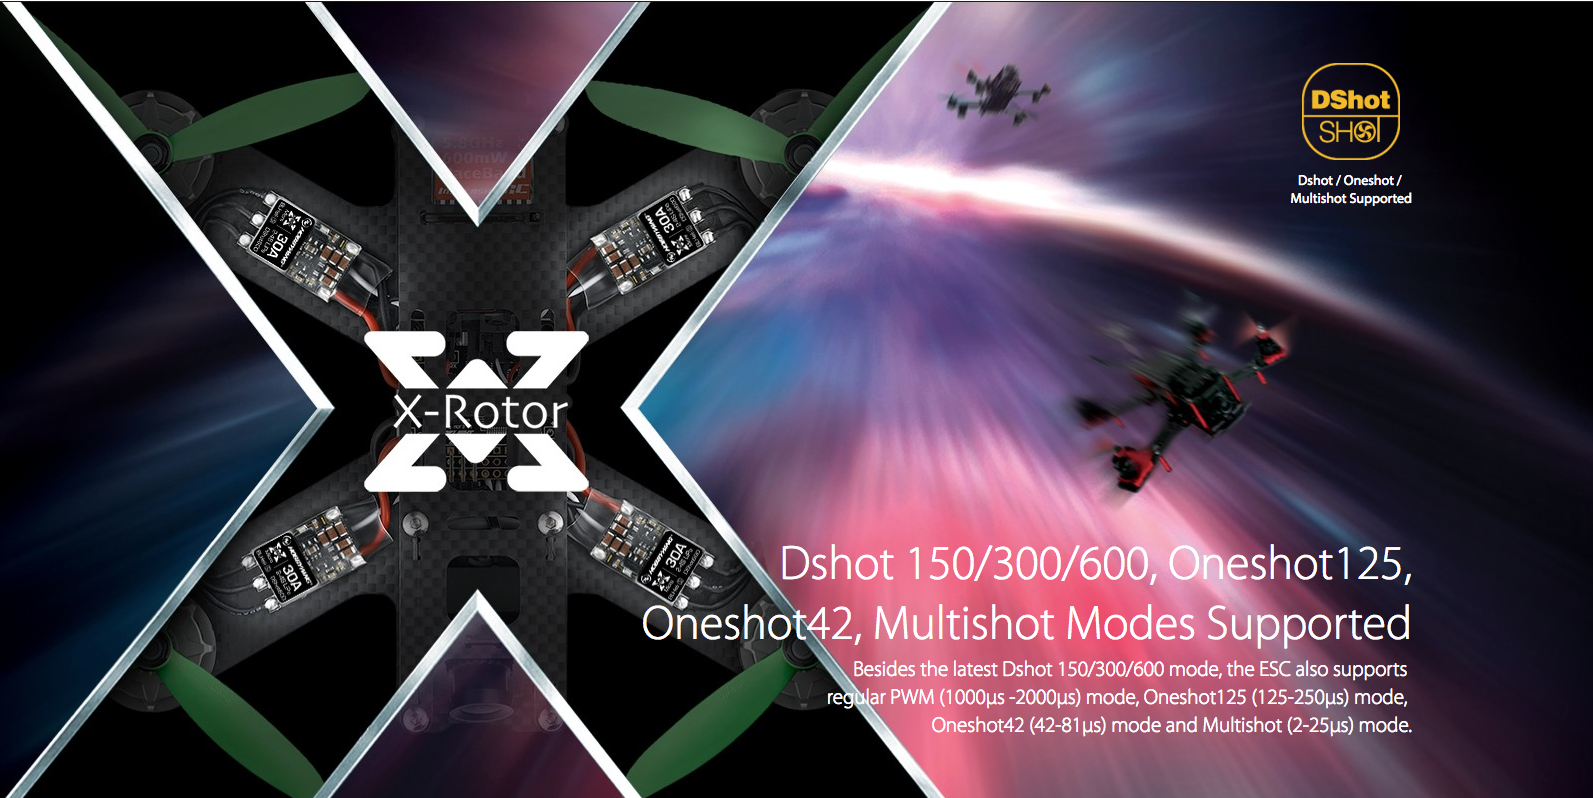 News: XRotor Micro BLHeli-s 30A DShot600